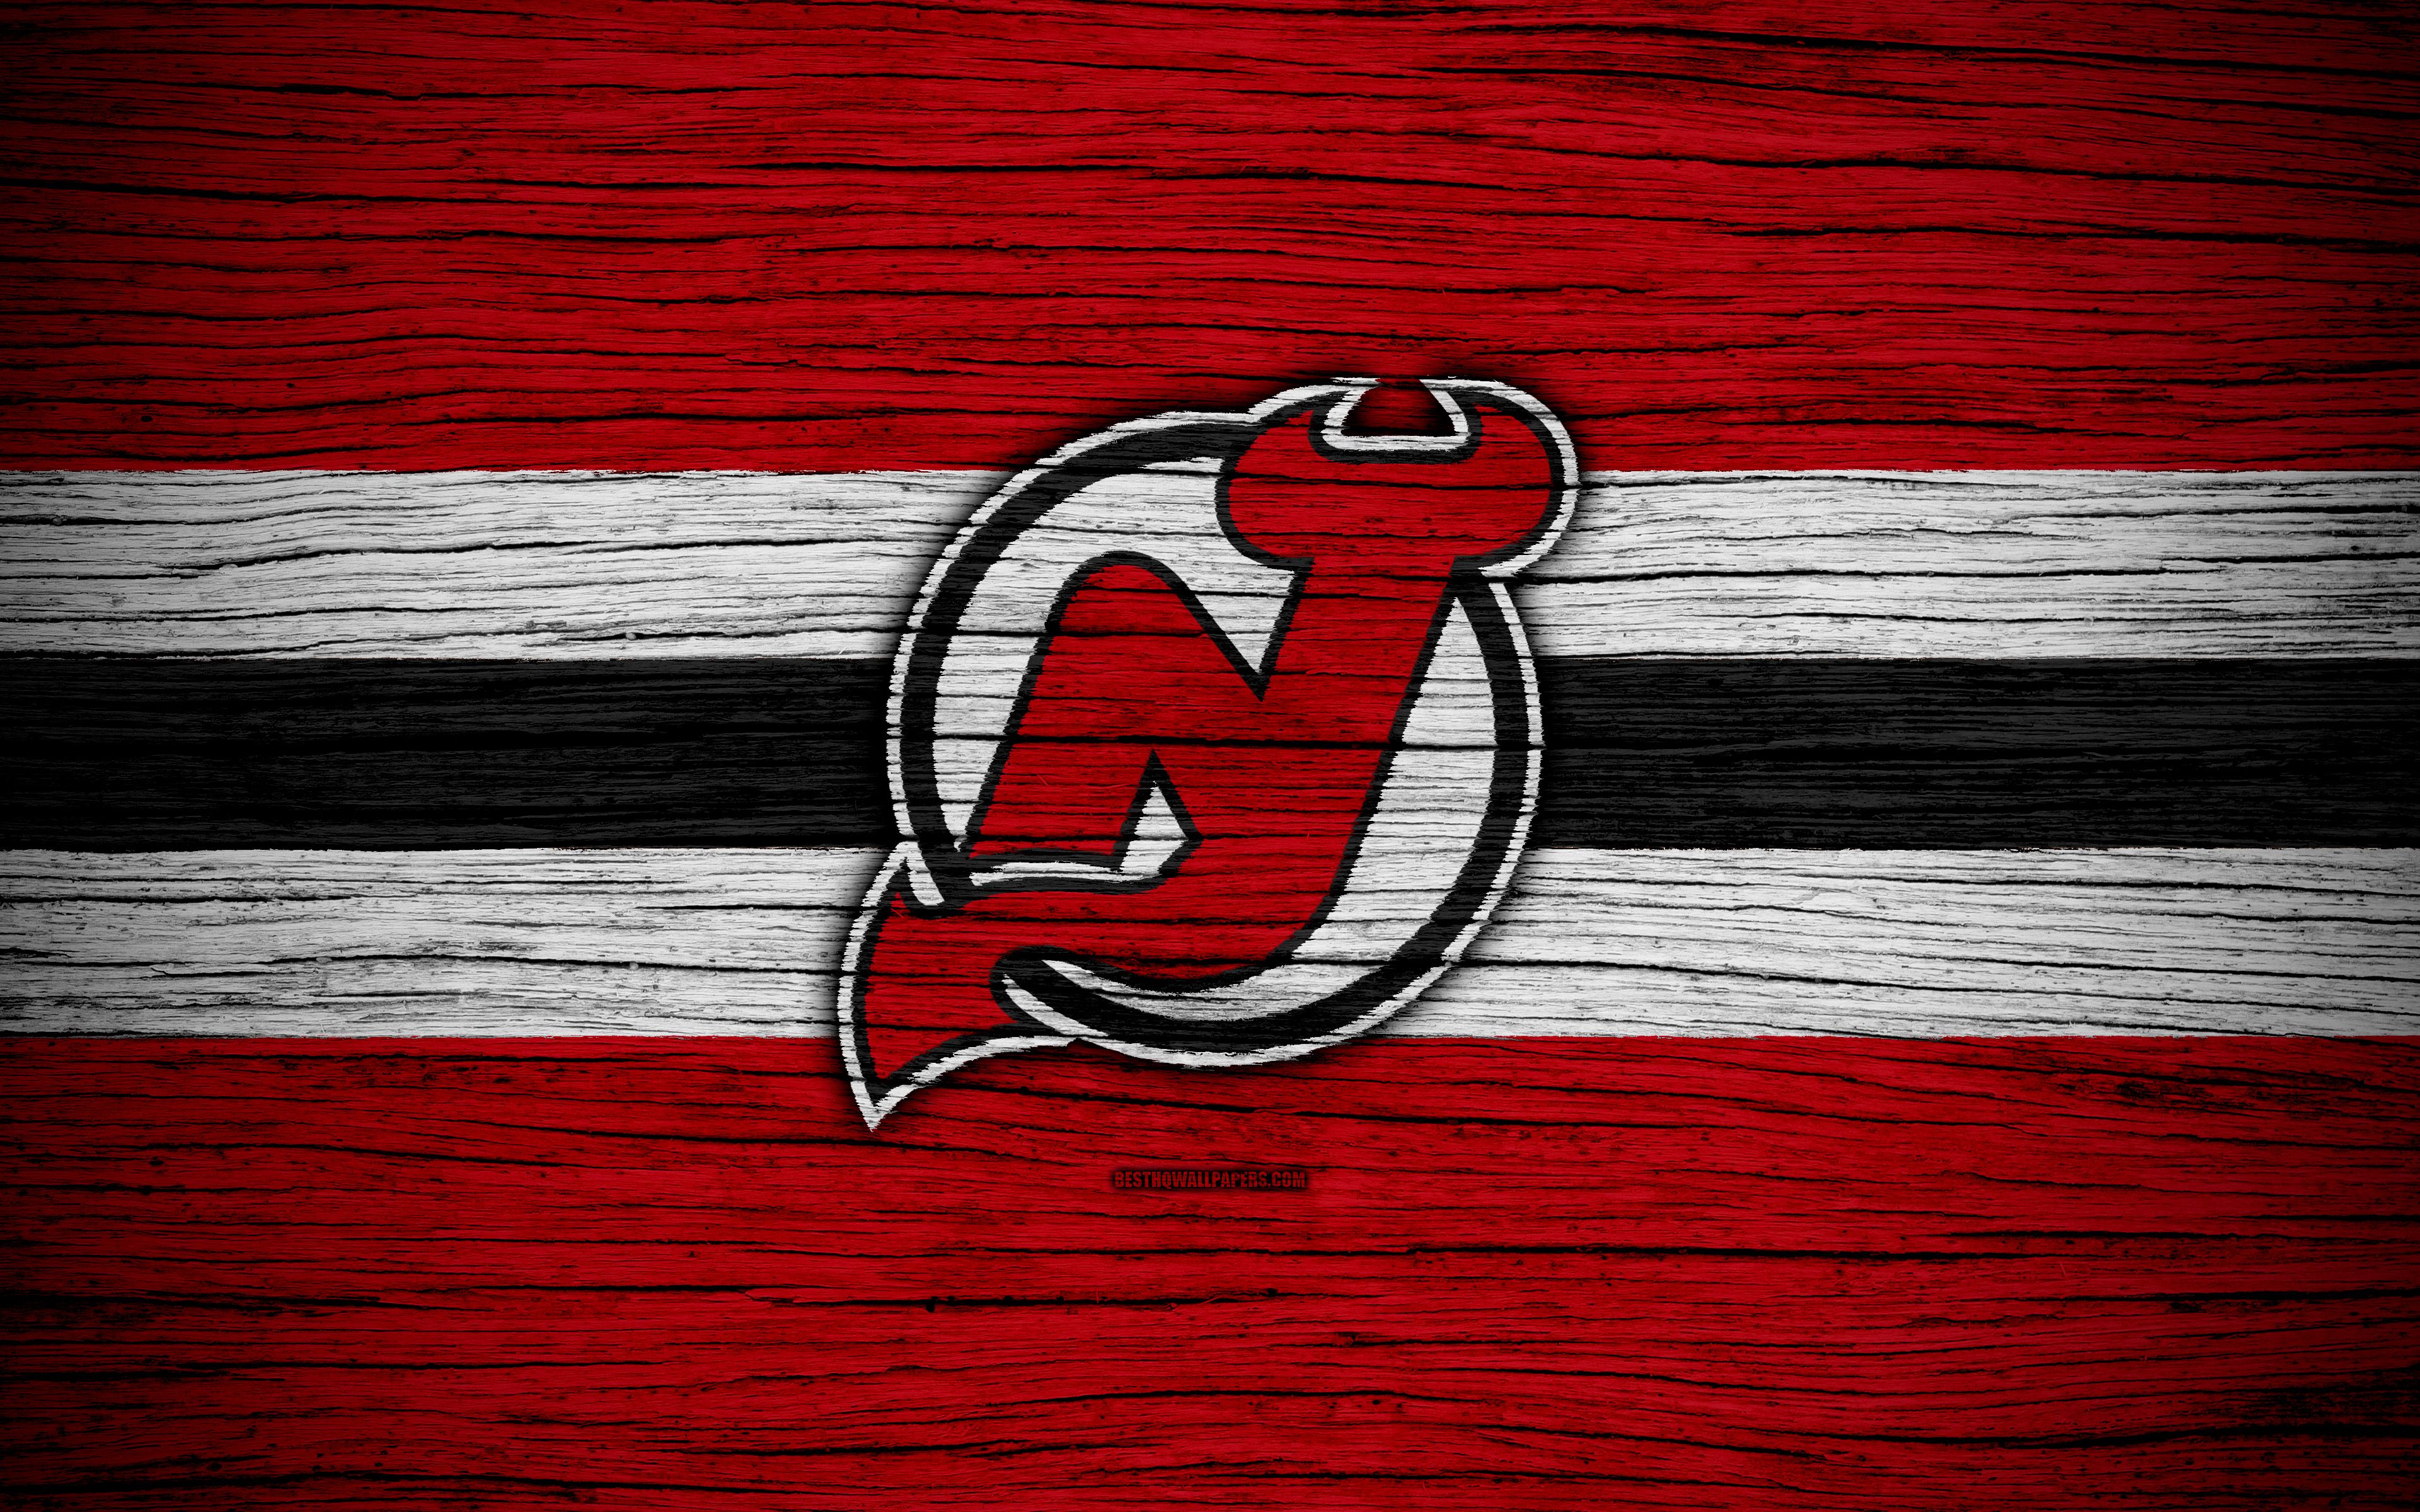 New Jersey Devils, 4k, Nhl, Hockey Club, Eastern Conference